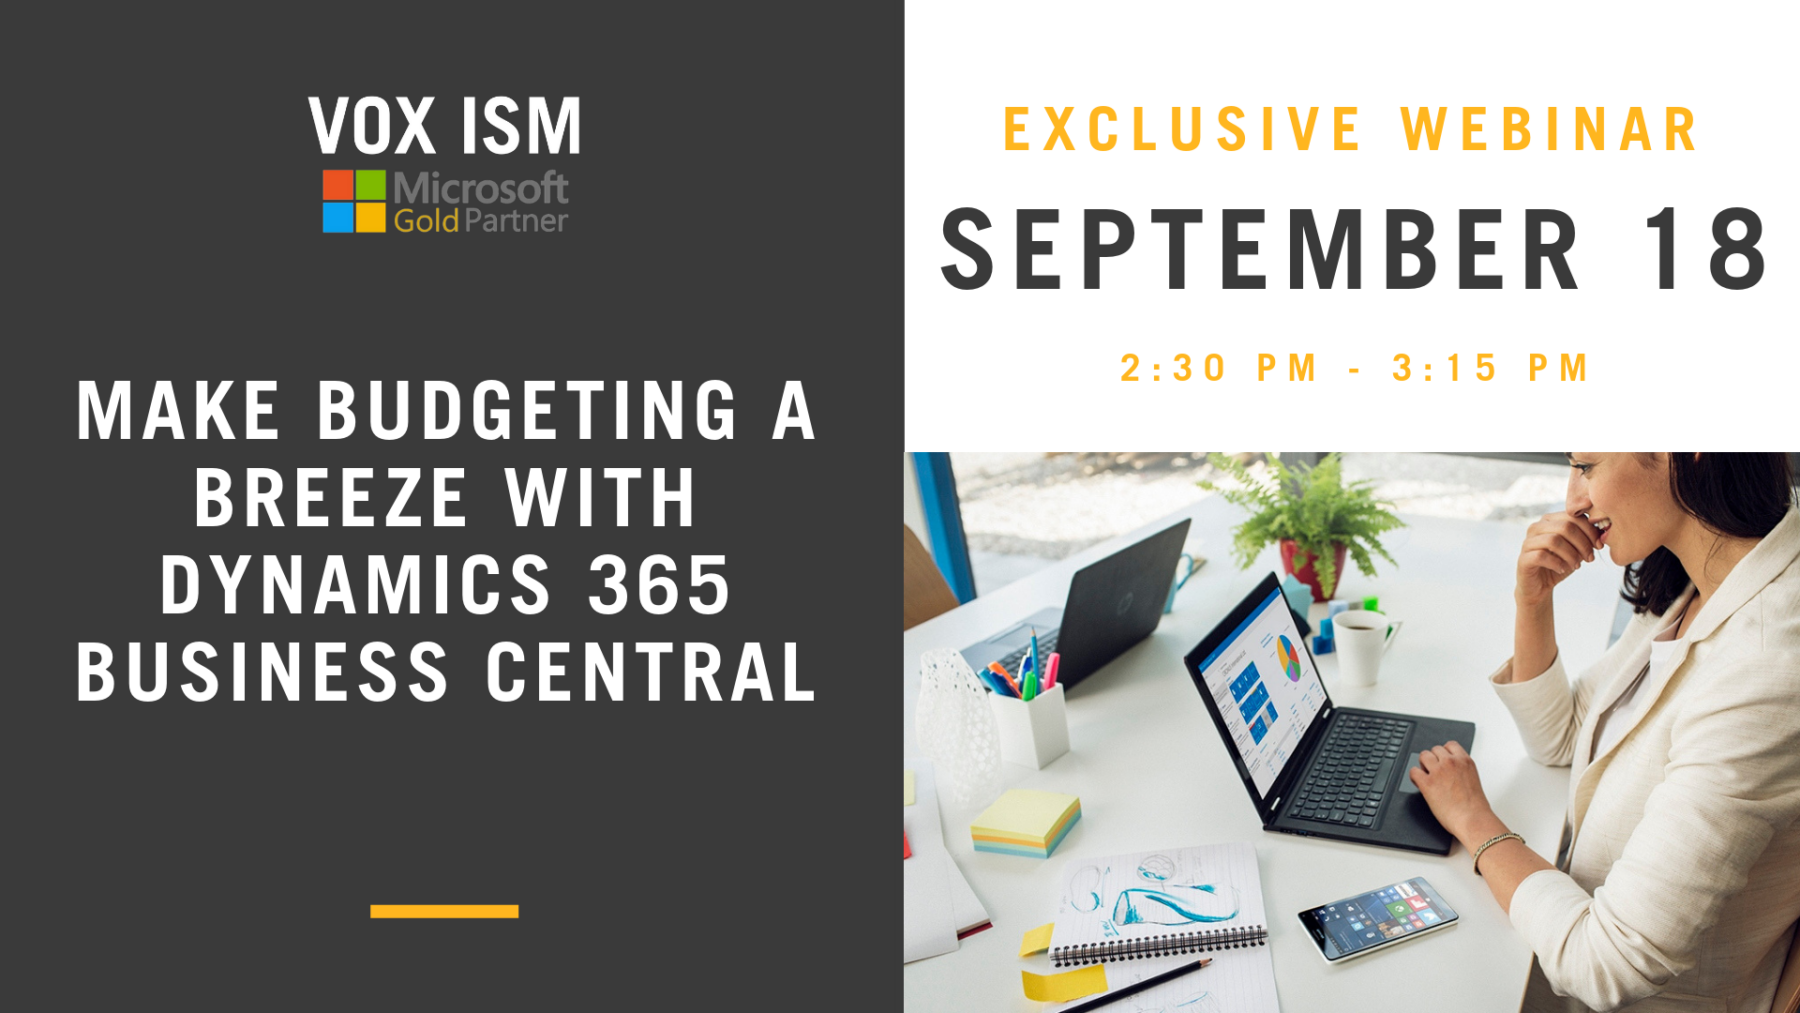 Make Budgeting a Breeze with Dynamics 365 Business Central - September 18 - Webinar - VOX ISM